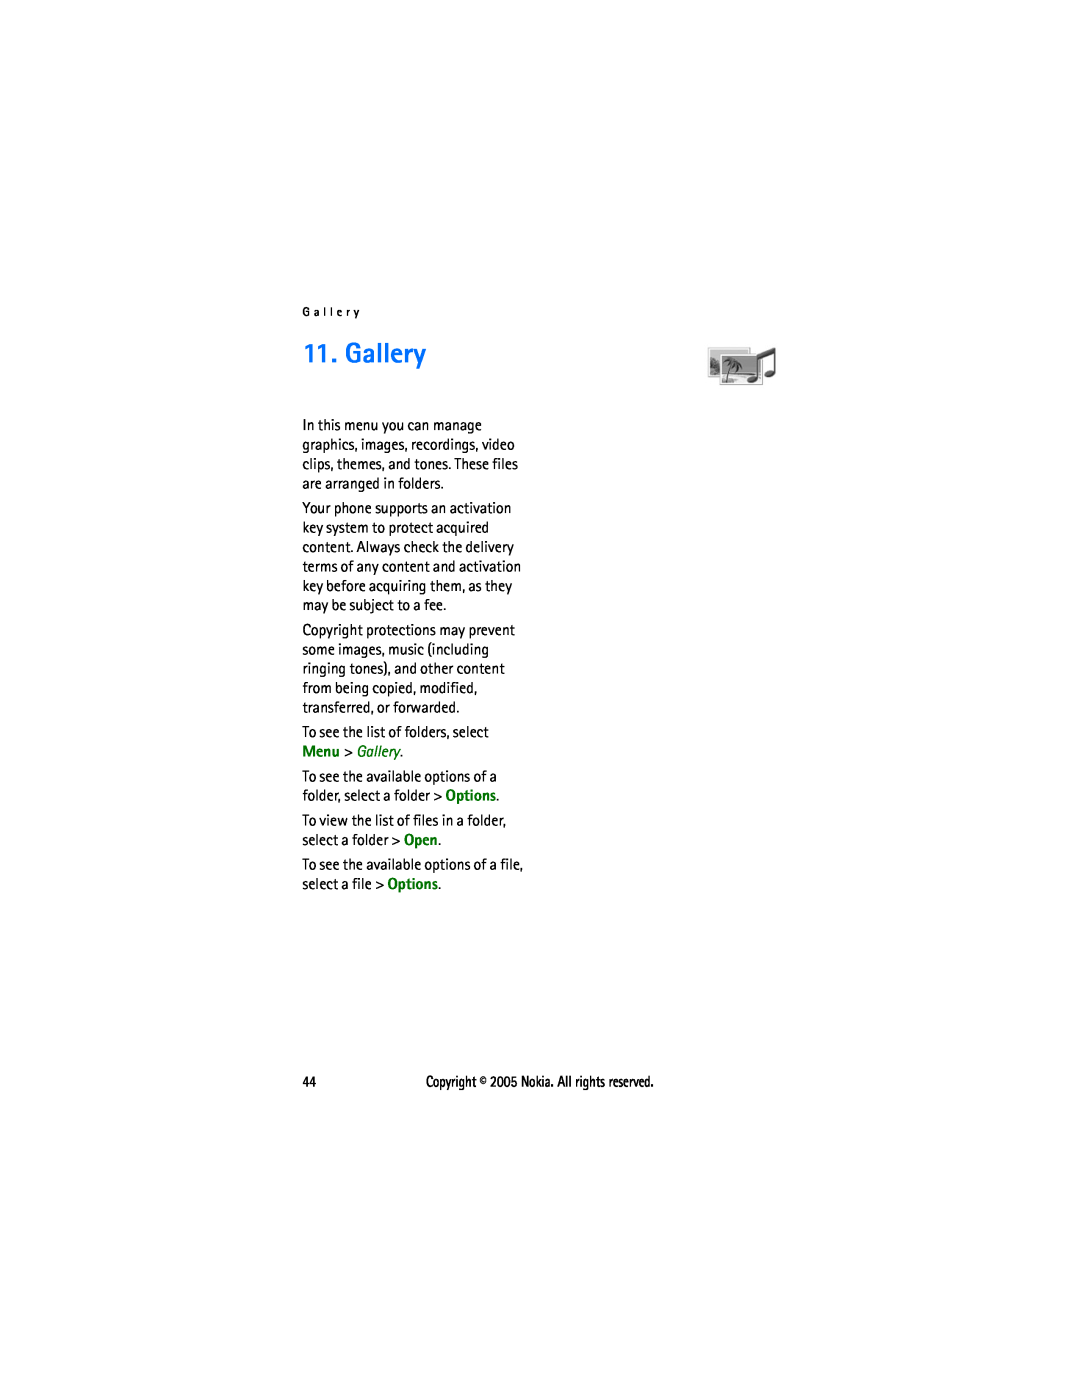 Sonic Alert 6021 manual To see the list of folders, select Menu Gallery 